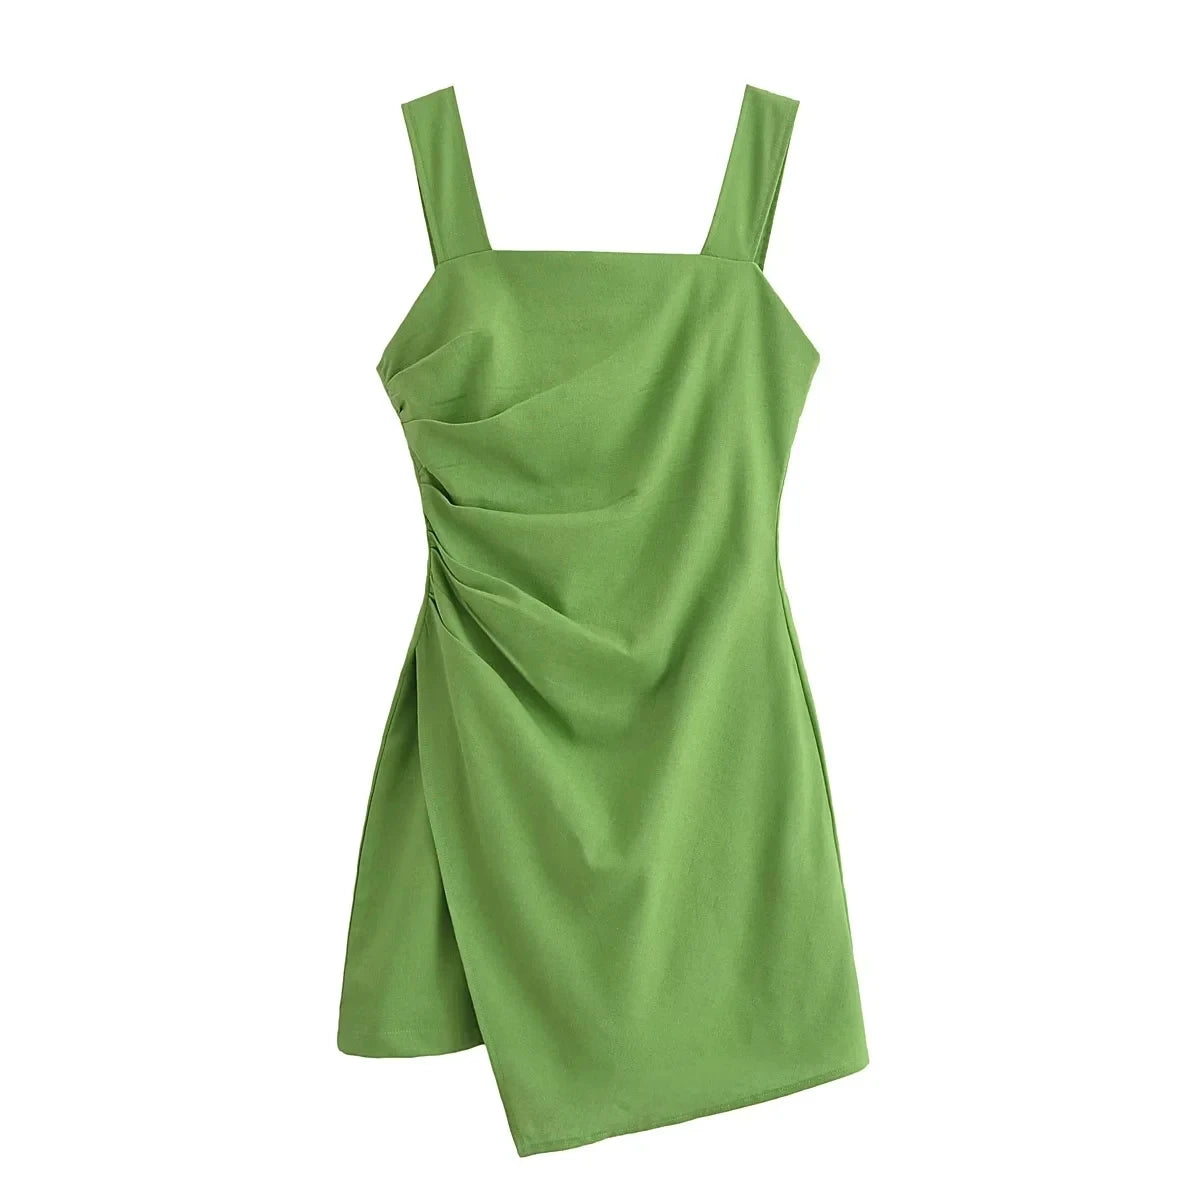 Mini Dresses- Solid Square Neck Mini Dress for Summer Cocktails- - Chuzko Women Clothing